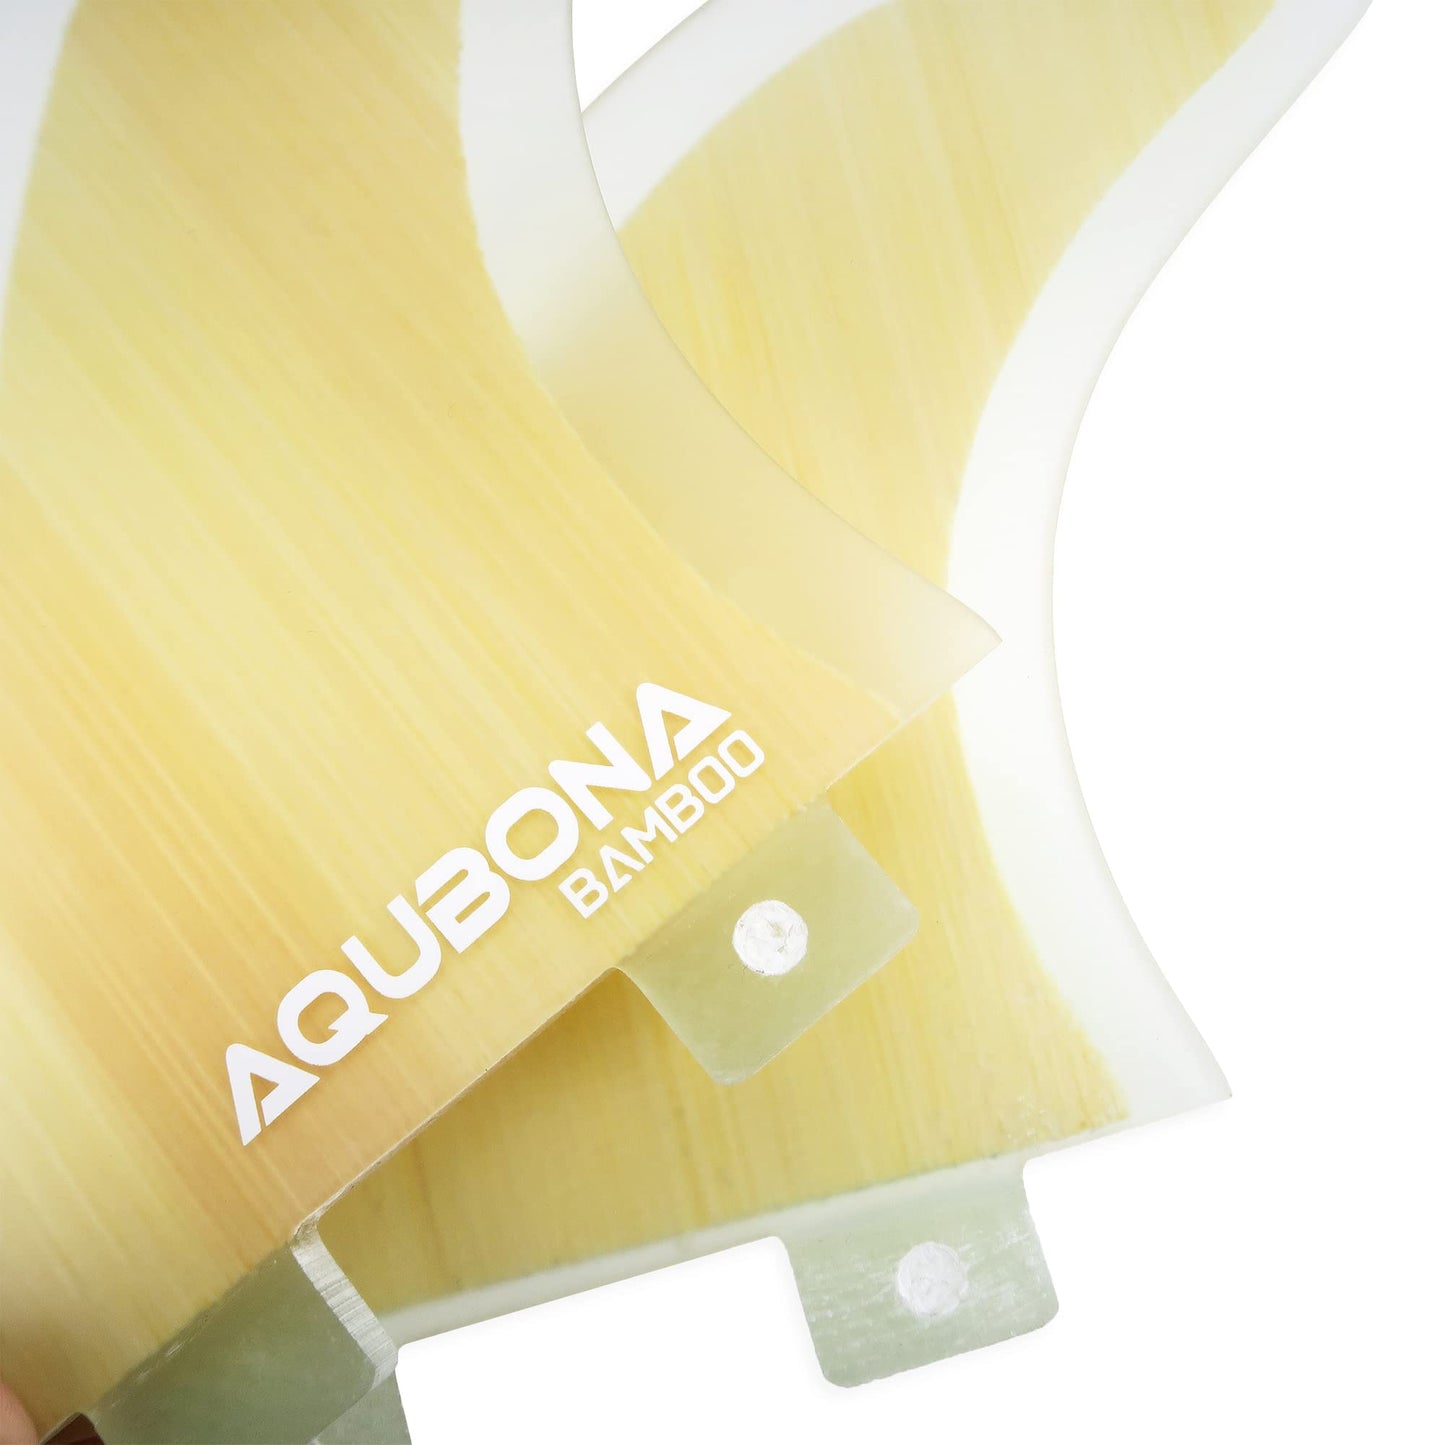 AQUBONA Surfboard Fins, Fiberglass Double Tabs Single Tabs Fins, Thruster (3 Fins) G5 Medium Future Fin for Surfing with Fin Key Screws Bag, Multiple Colour